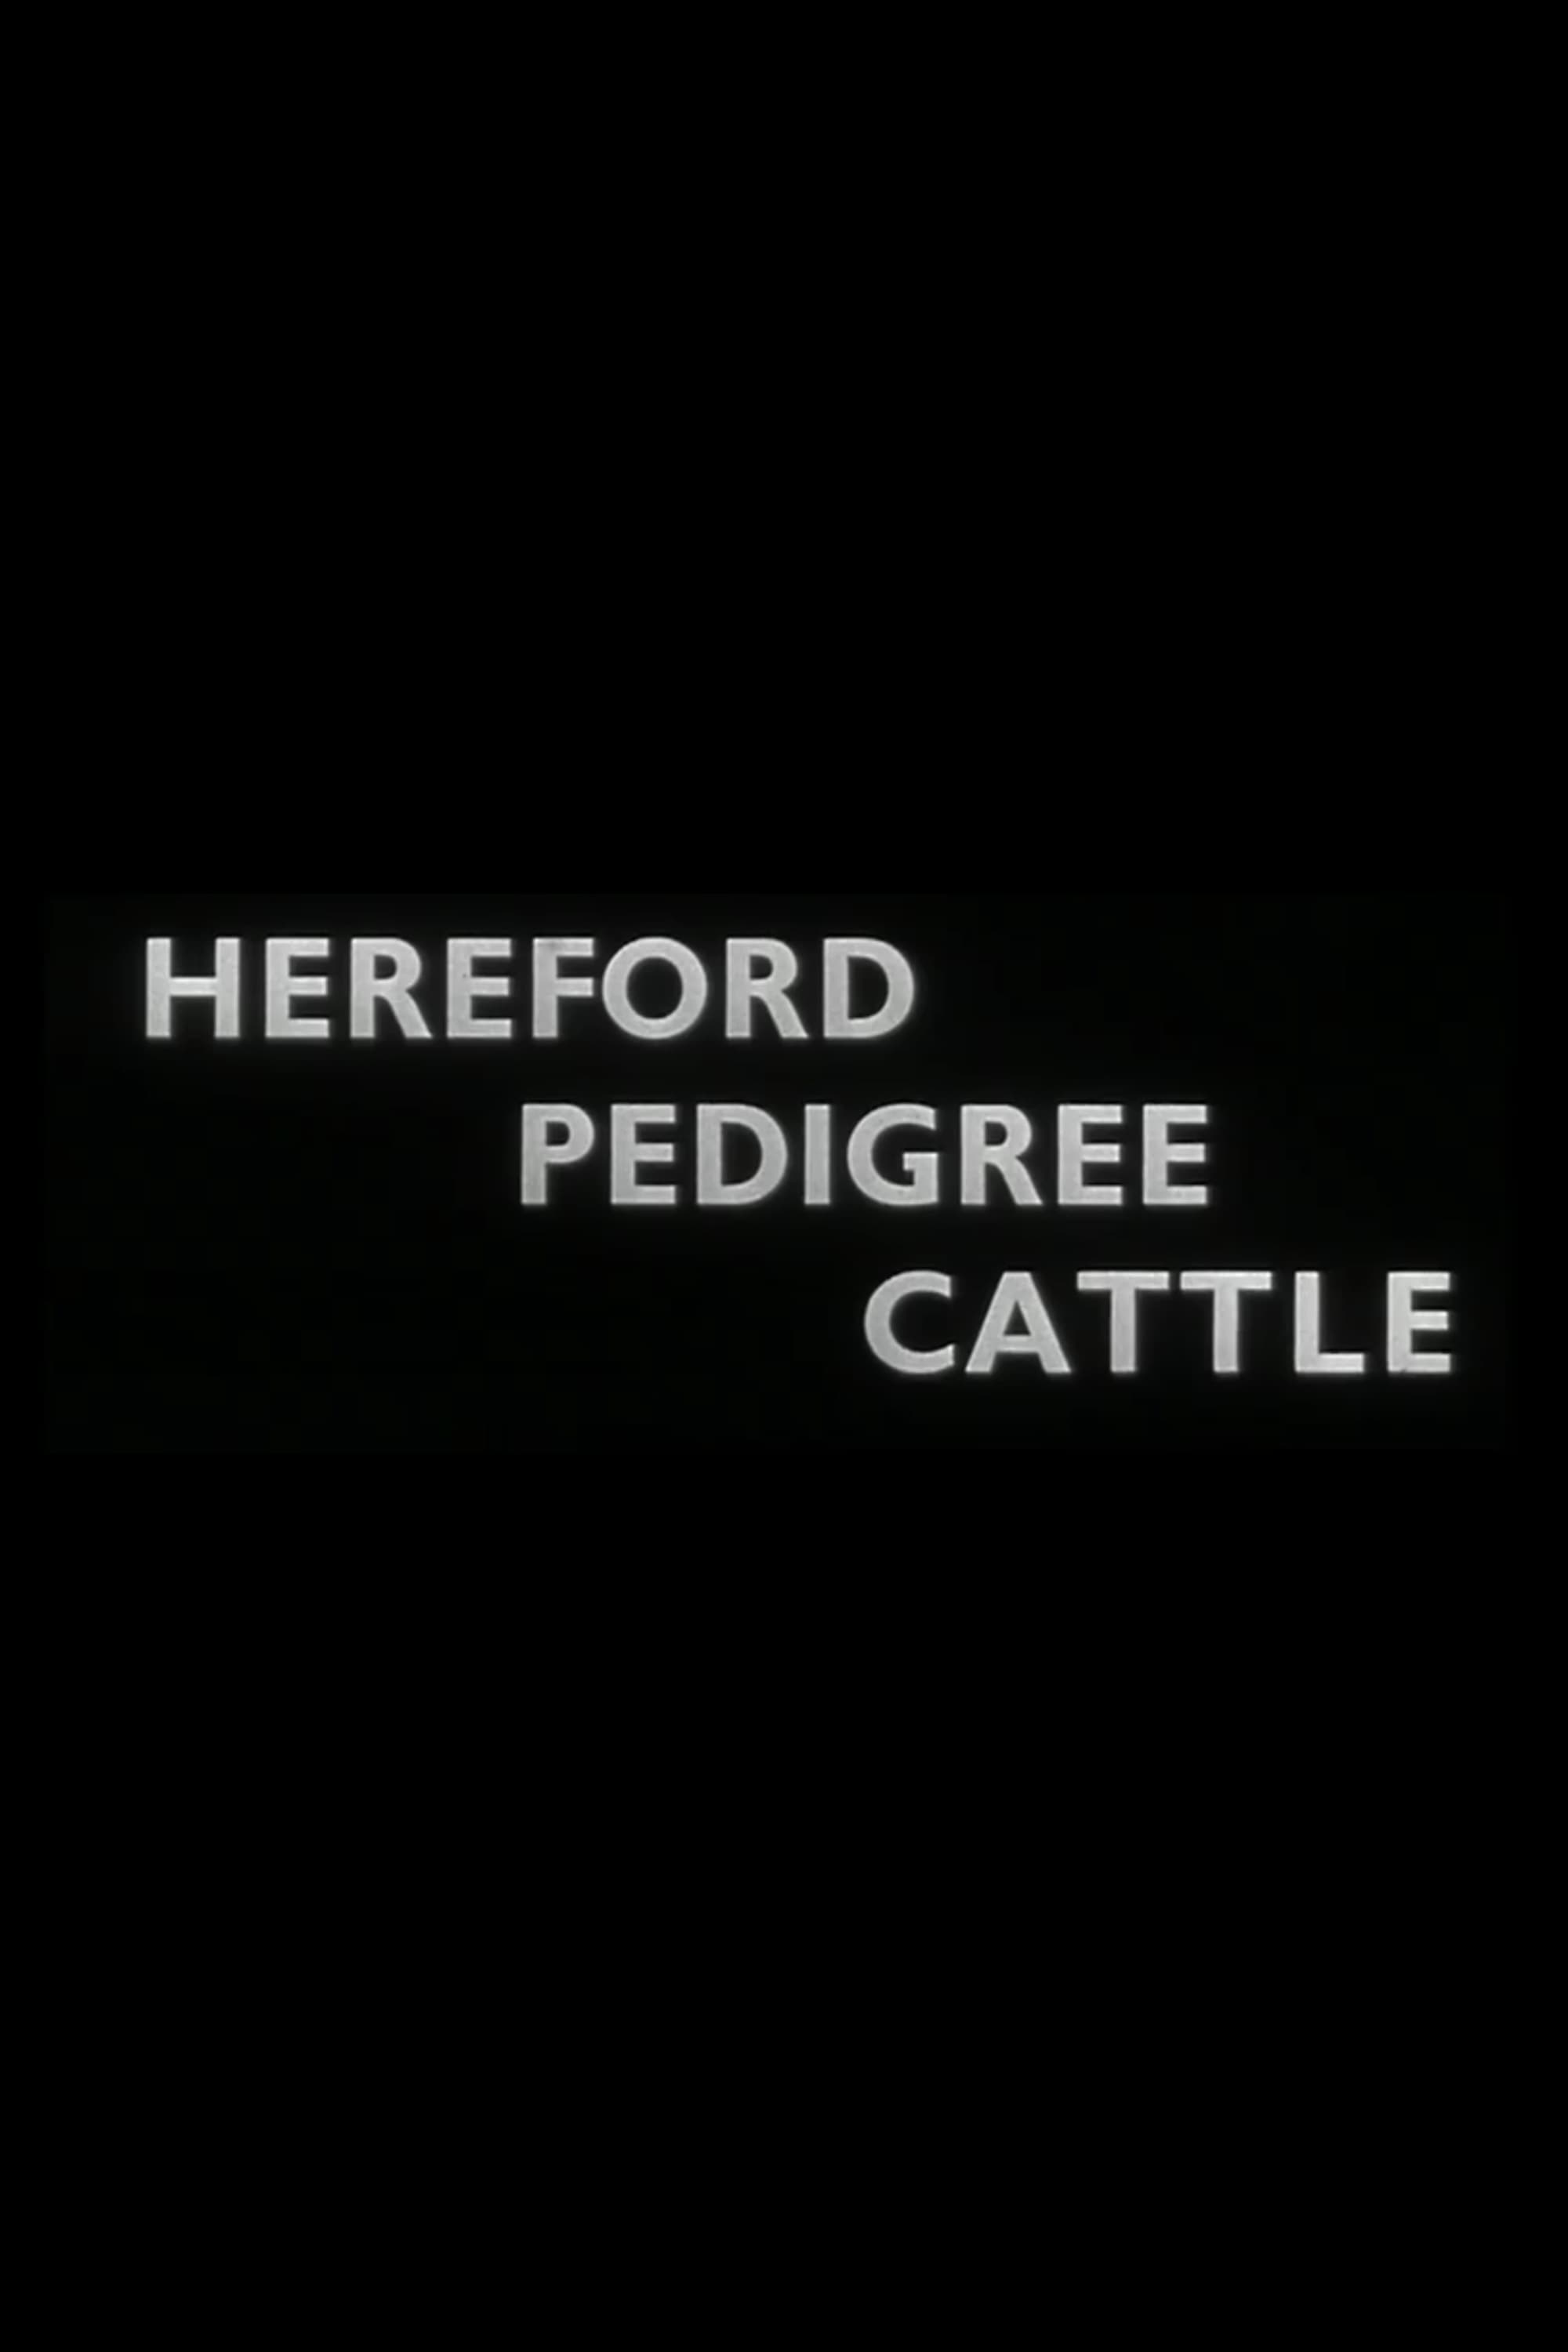 Hereford Pedigree Cattle